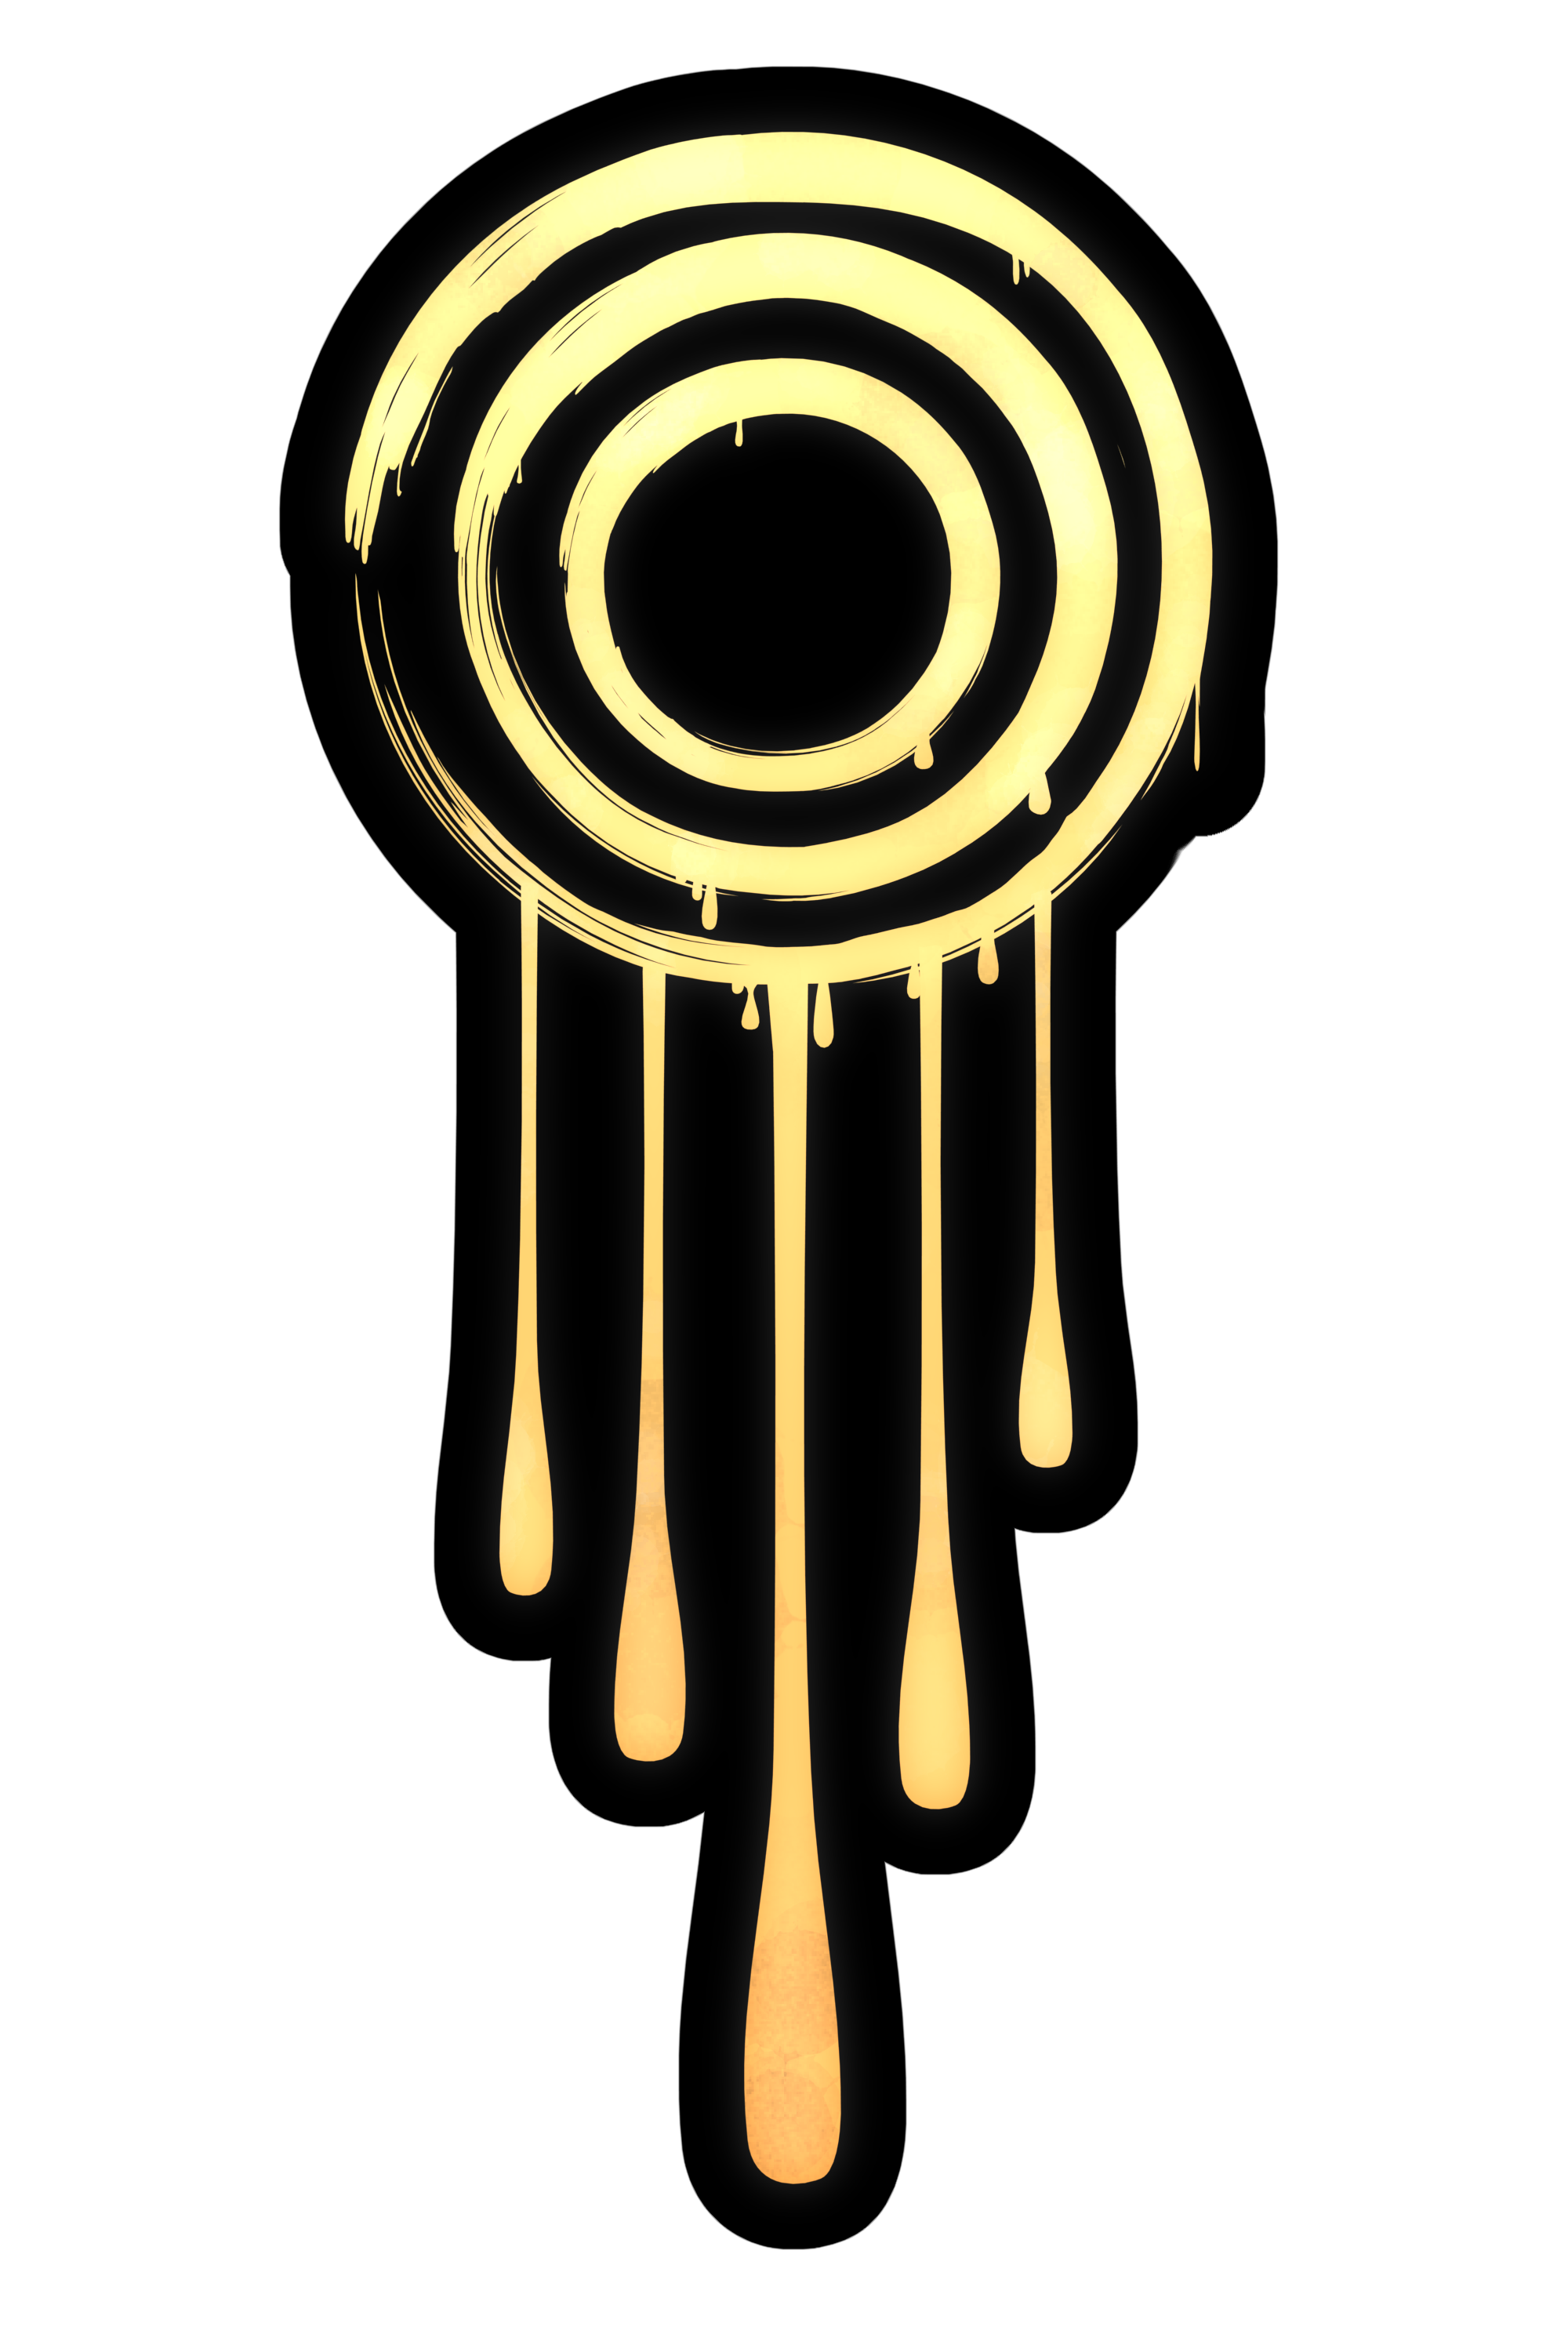 The Gold Rings Logo